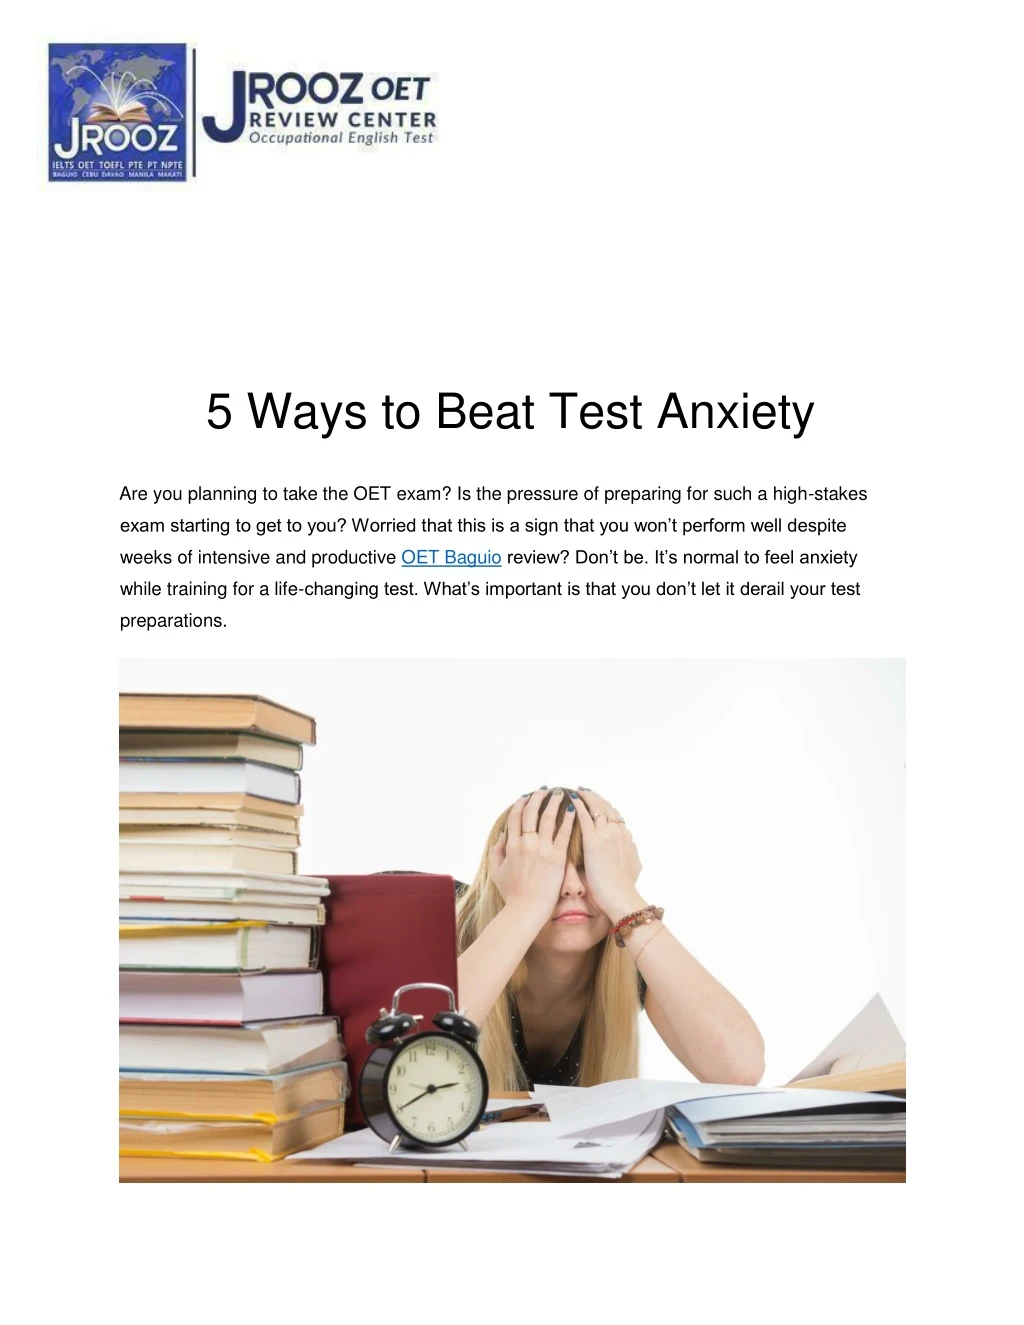 5 ways to beat test anxiety